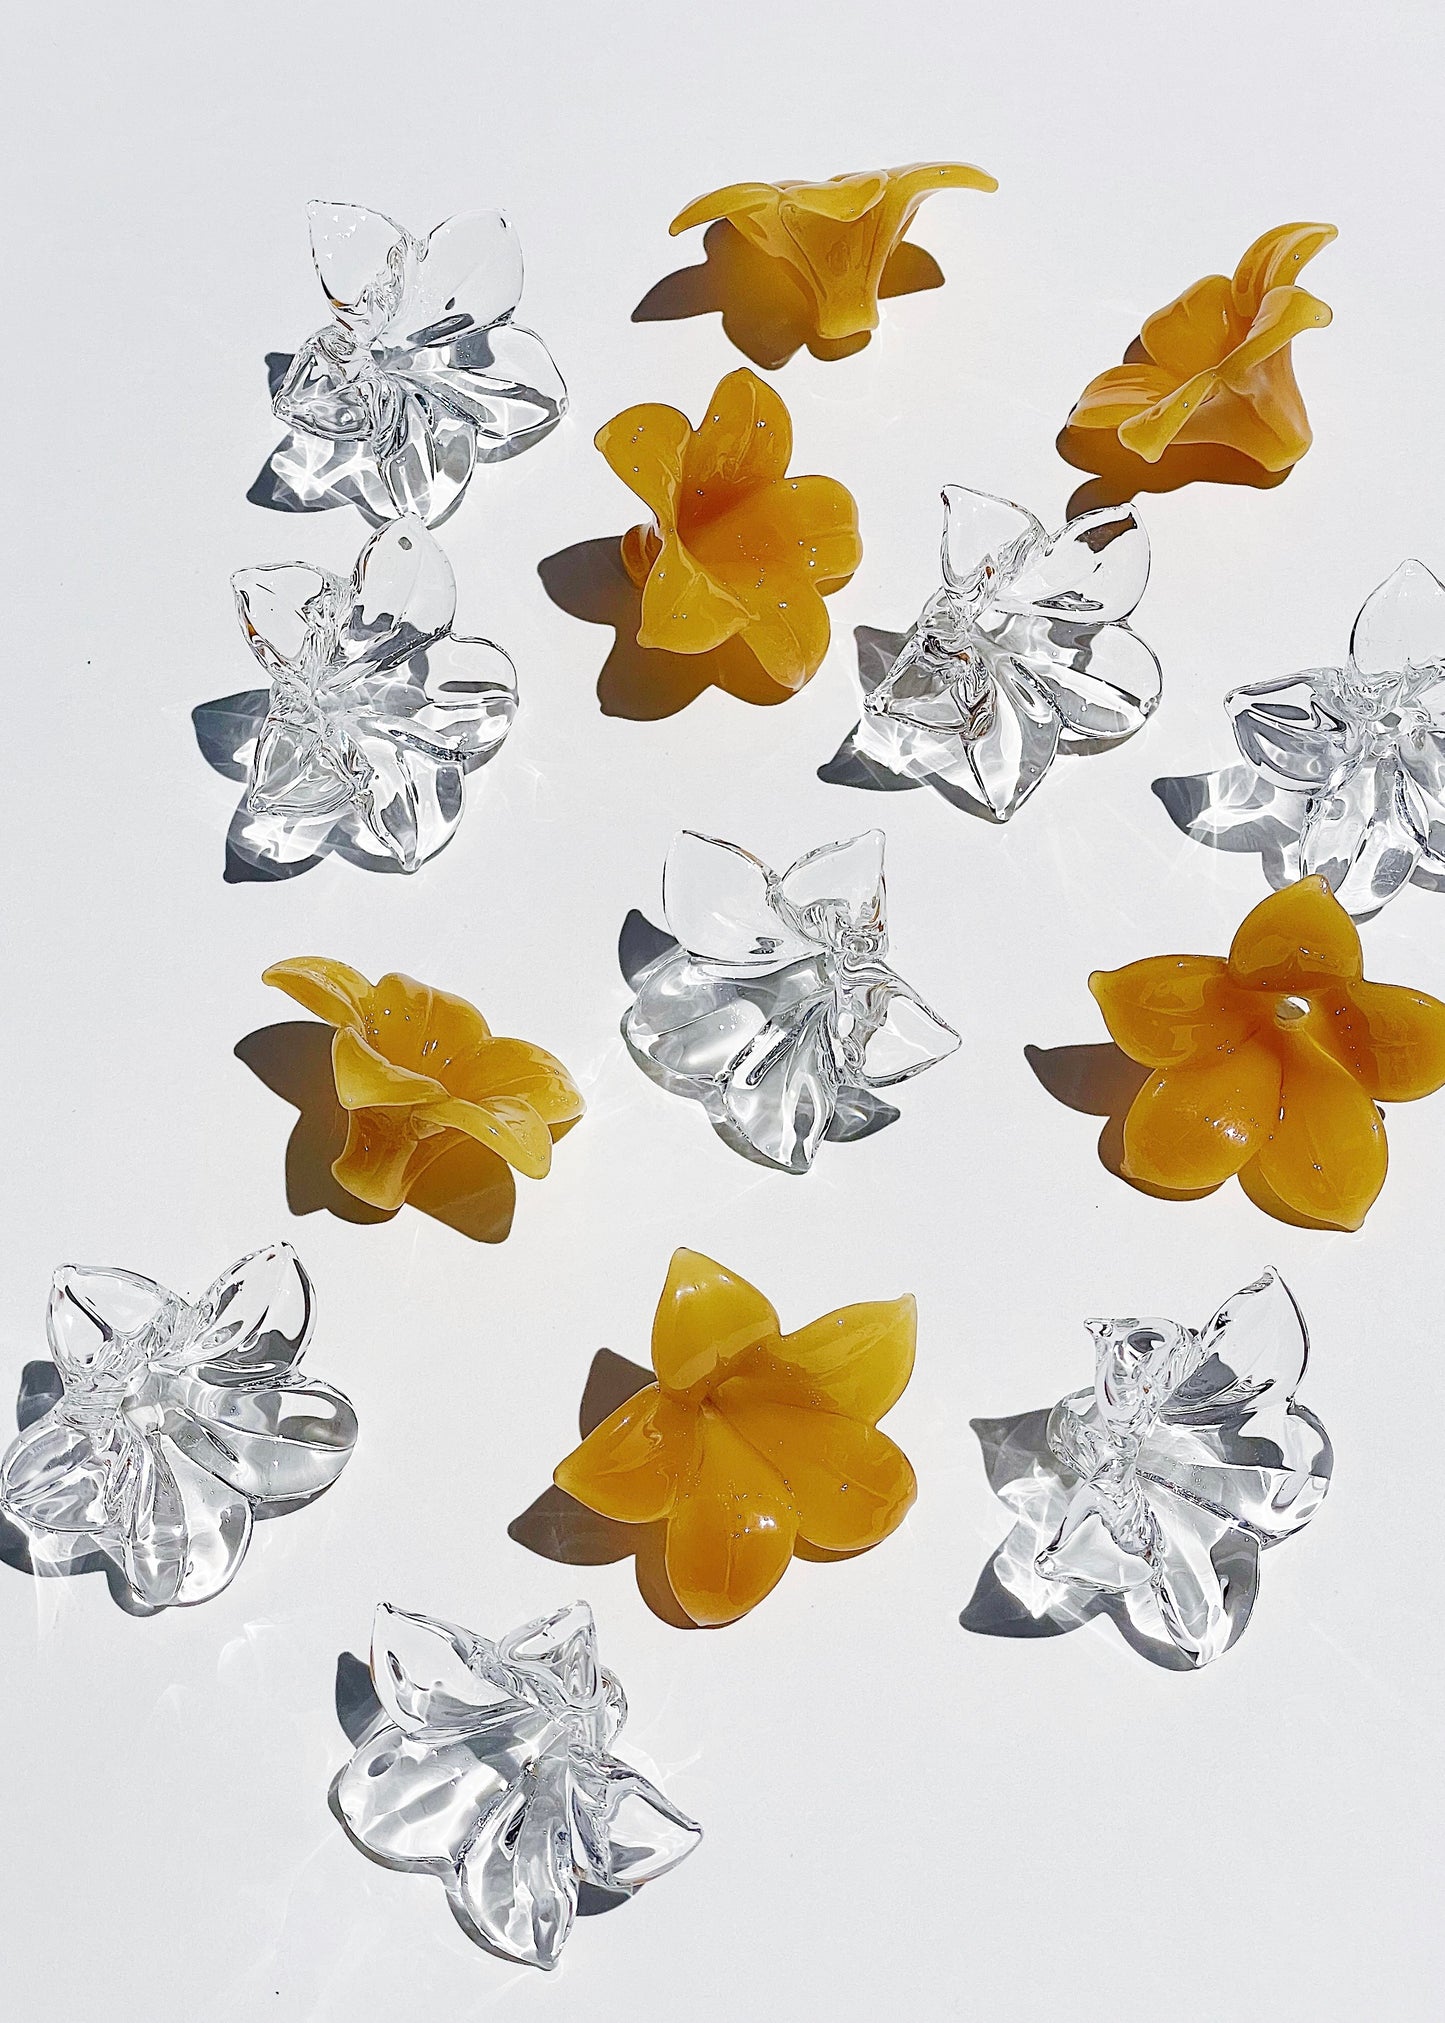 Single Pua Melia Plumeria Flowers - Clear & Honey Yellow